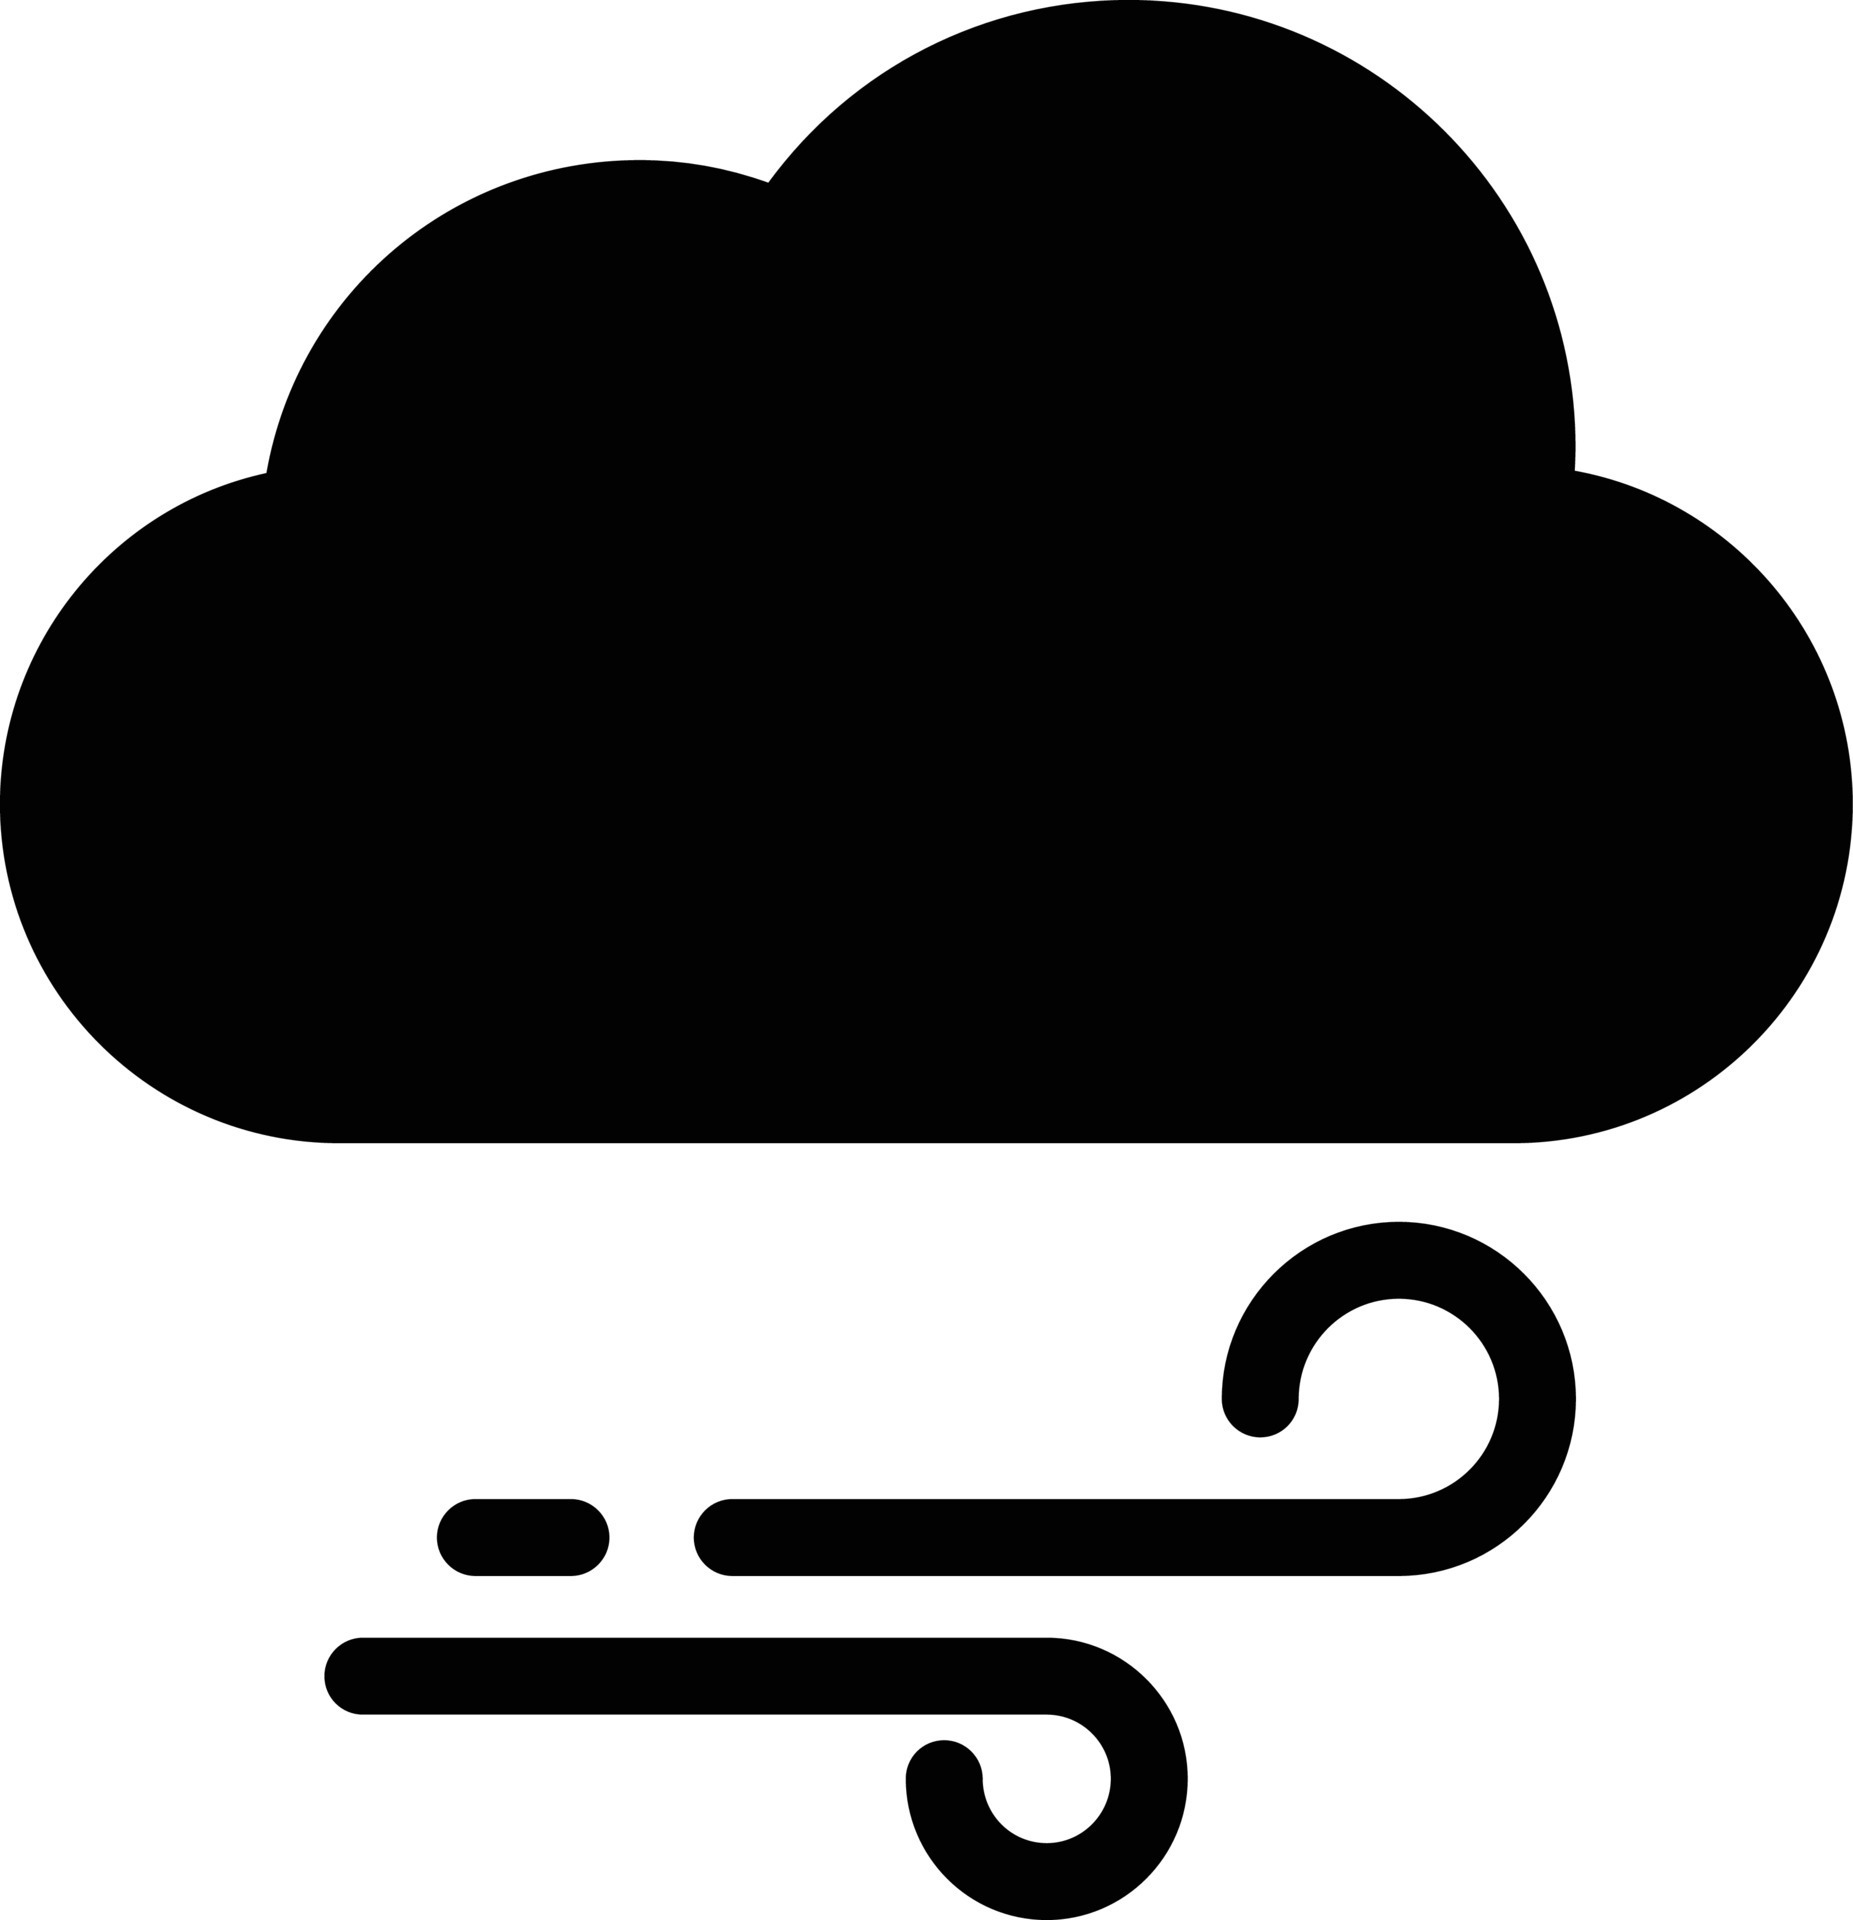 weather symbols thunderstorm